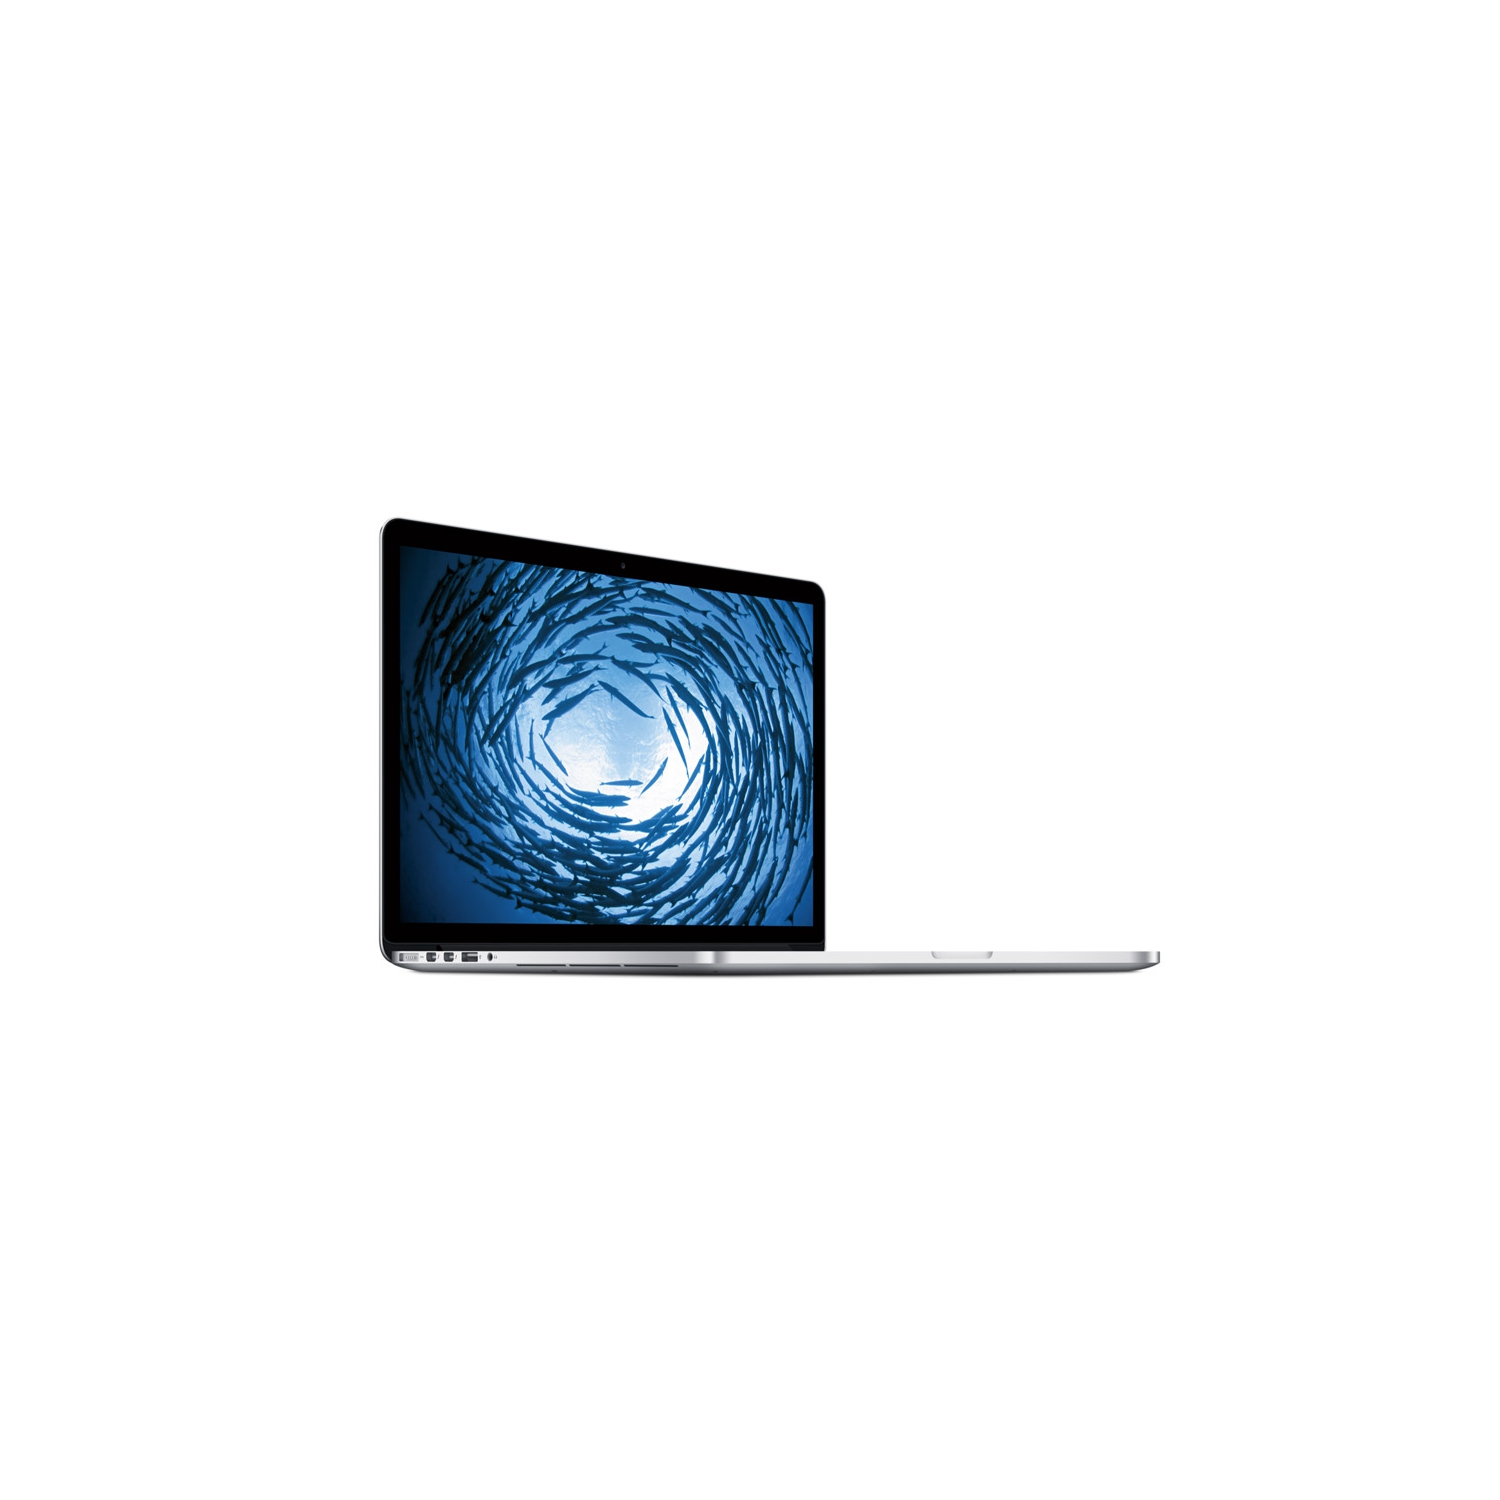 Refurbished (Excellent) - Apple MacBook Pro Retina 13" (Intel Core i5 2.7GHz / 8GB RAM / 128GB) - 2015 Model